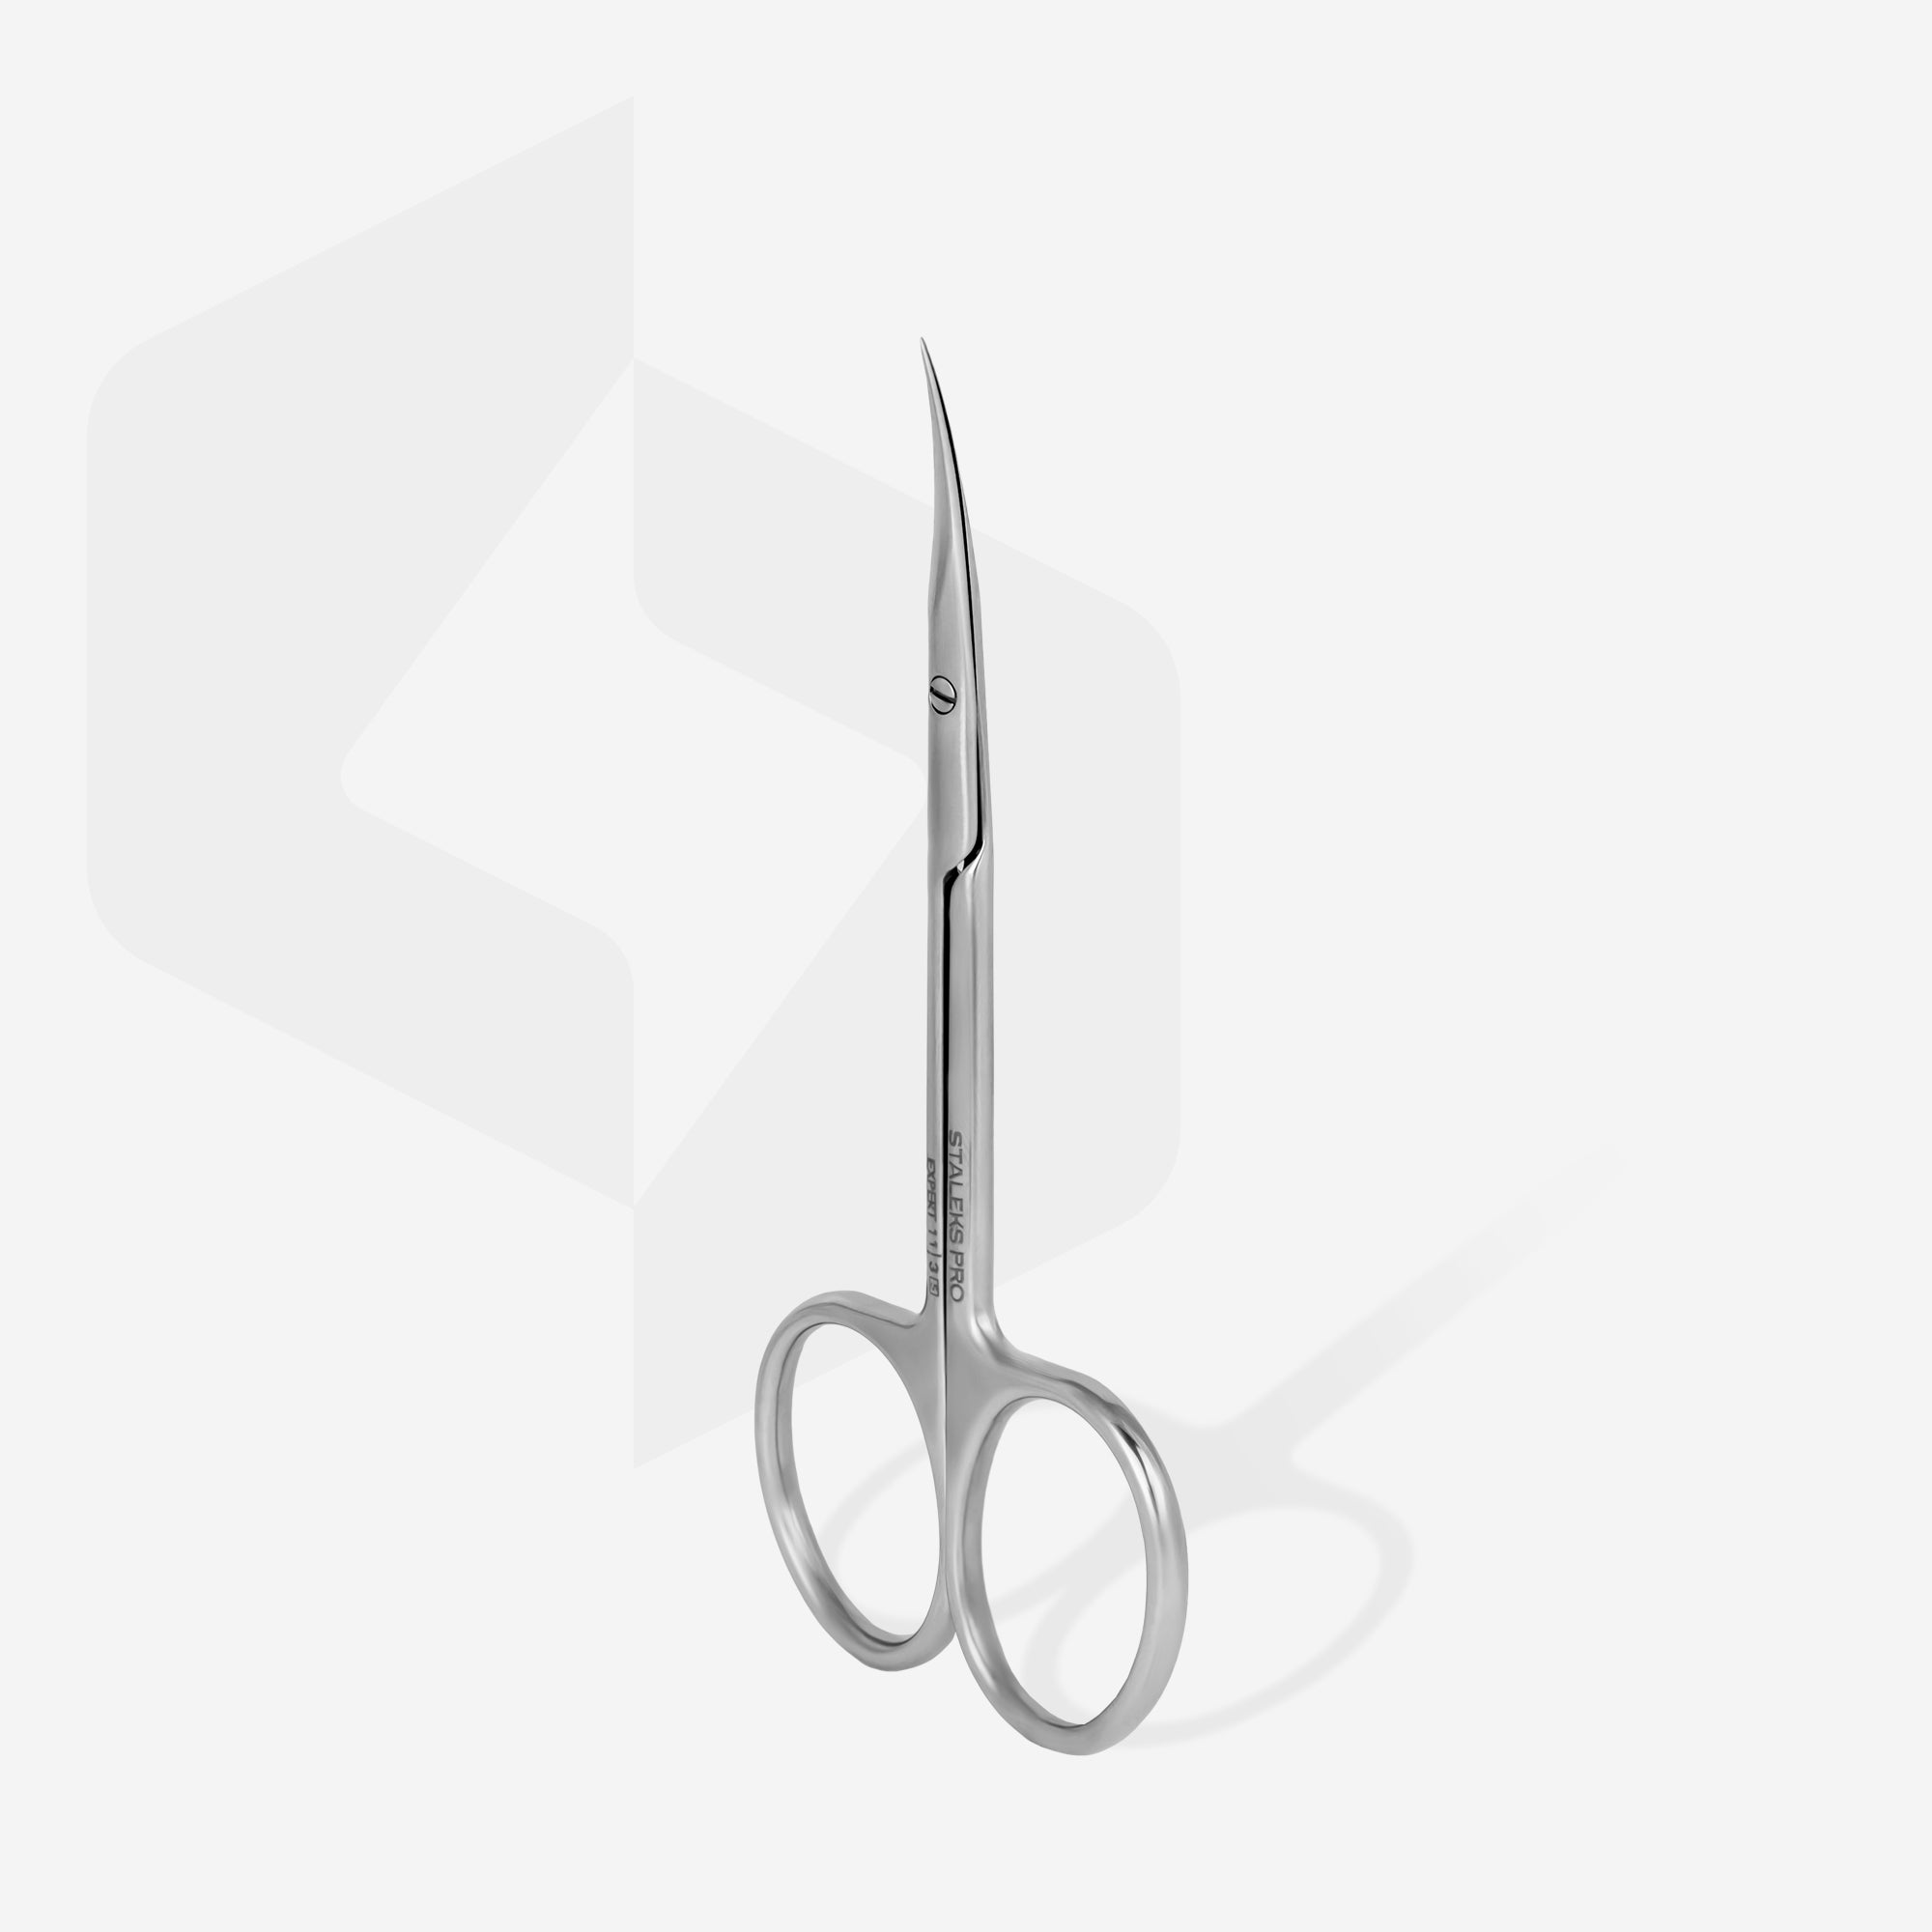 Staleks Expert Cuticle Scissors 11/3 - LEFT HANDED